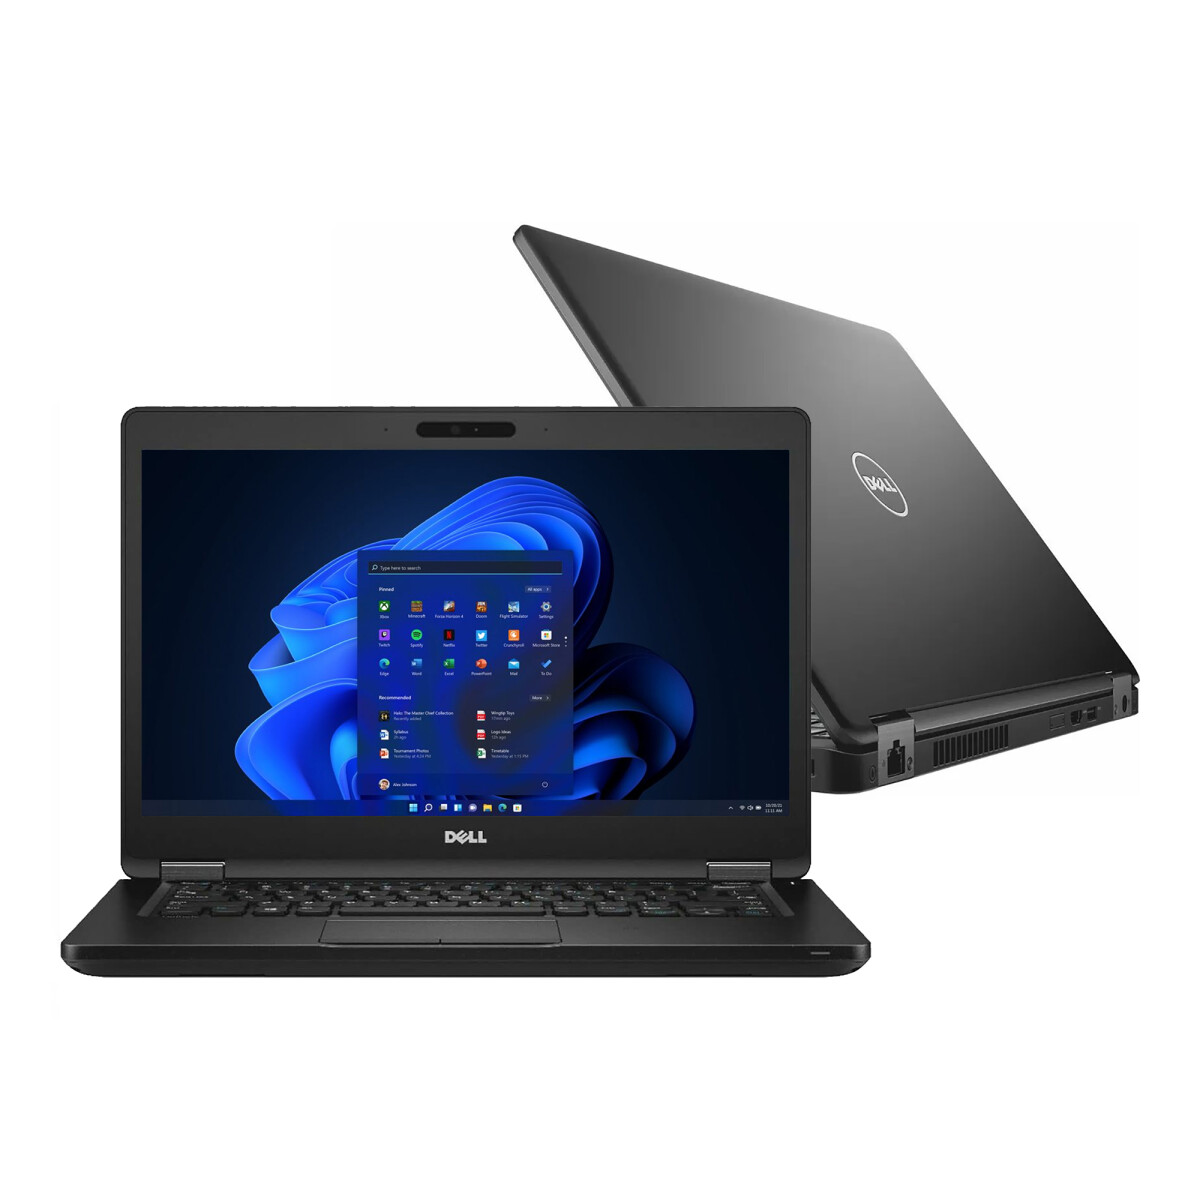 Dell - Notebook Latitude 5490 - 14'' Multitáctil Led Anti-reflejo. Intel Core I5 8250U. Intel Uhd 62 - 001 